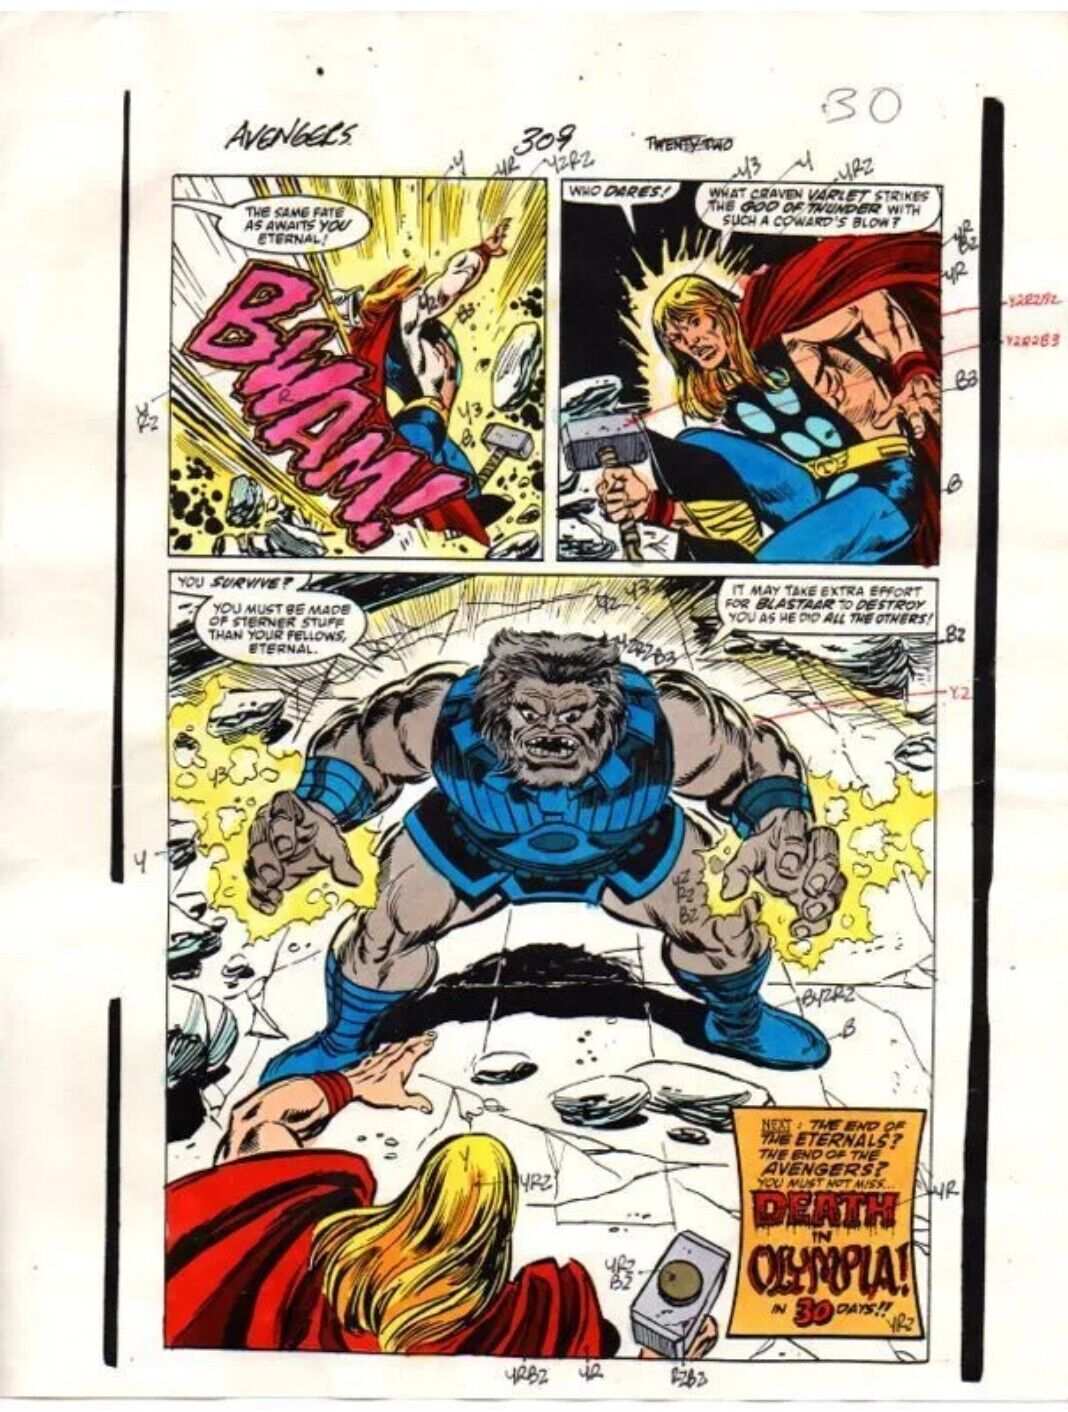 Original 1989 Thor Avengers 309 color guide art, Marvel comic production artwork